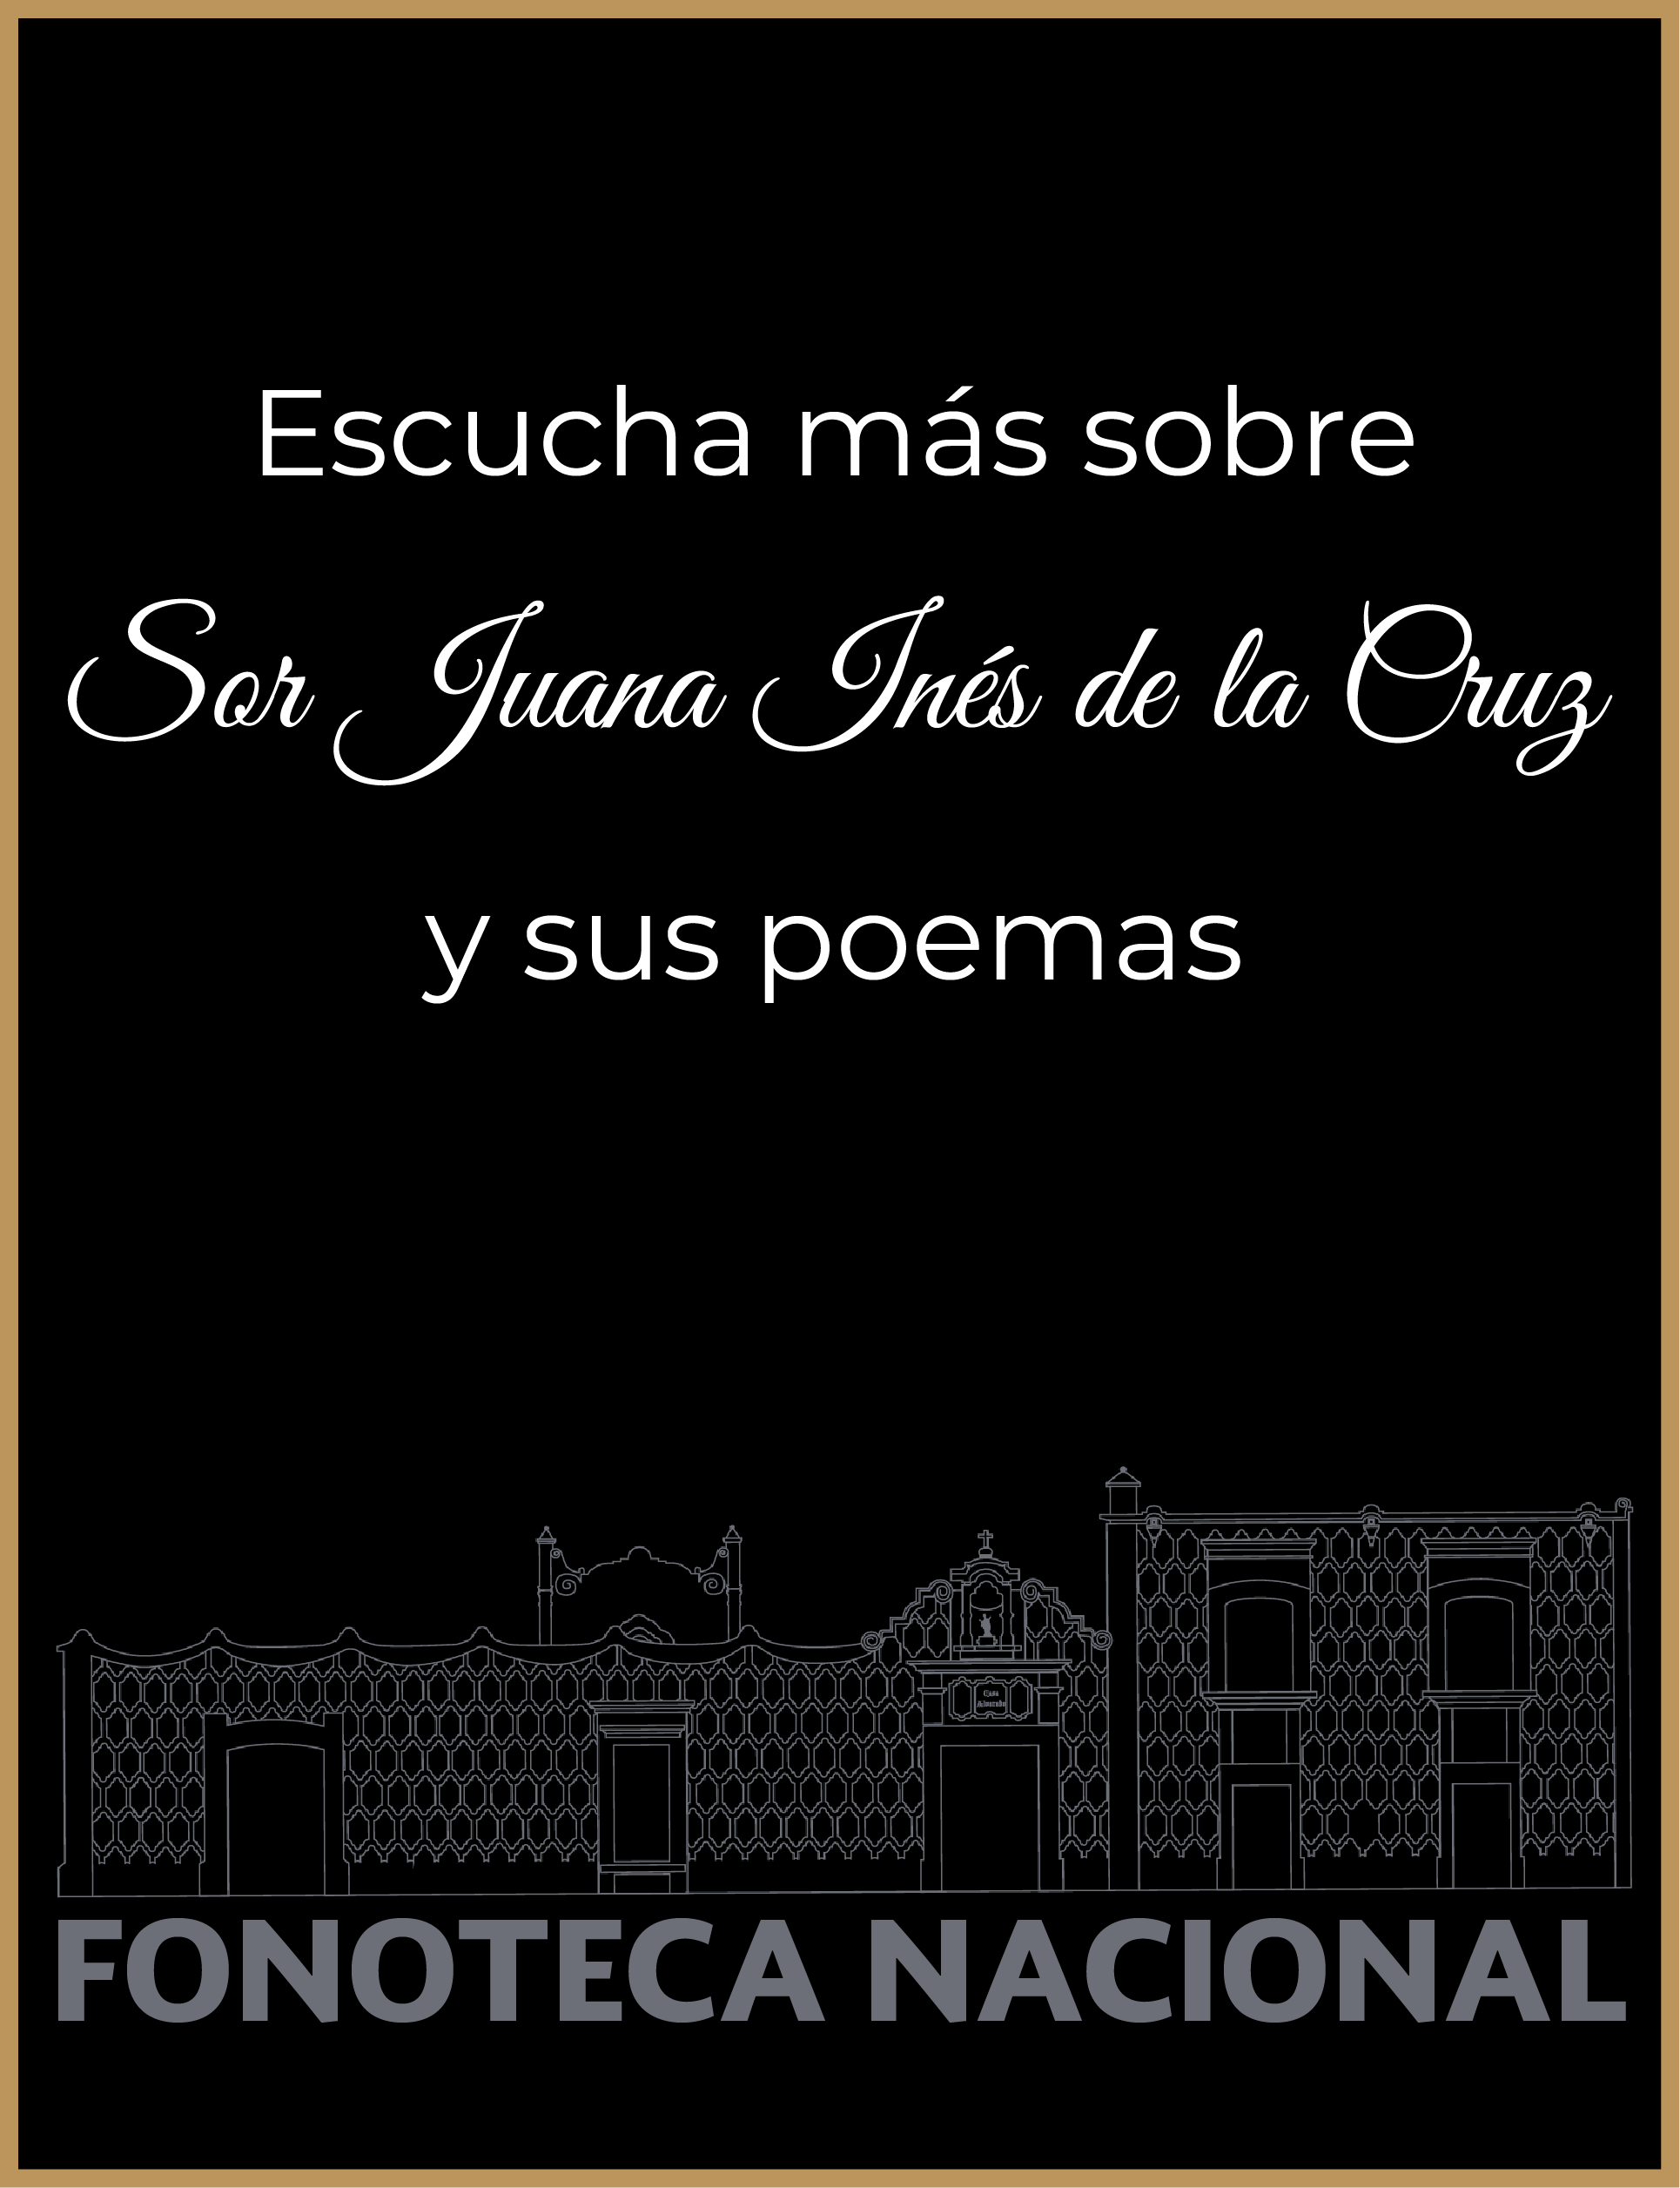 Poemas de Sor Juana Inés de la Cruz en la fonoteca nacional